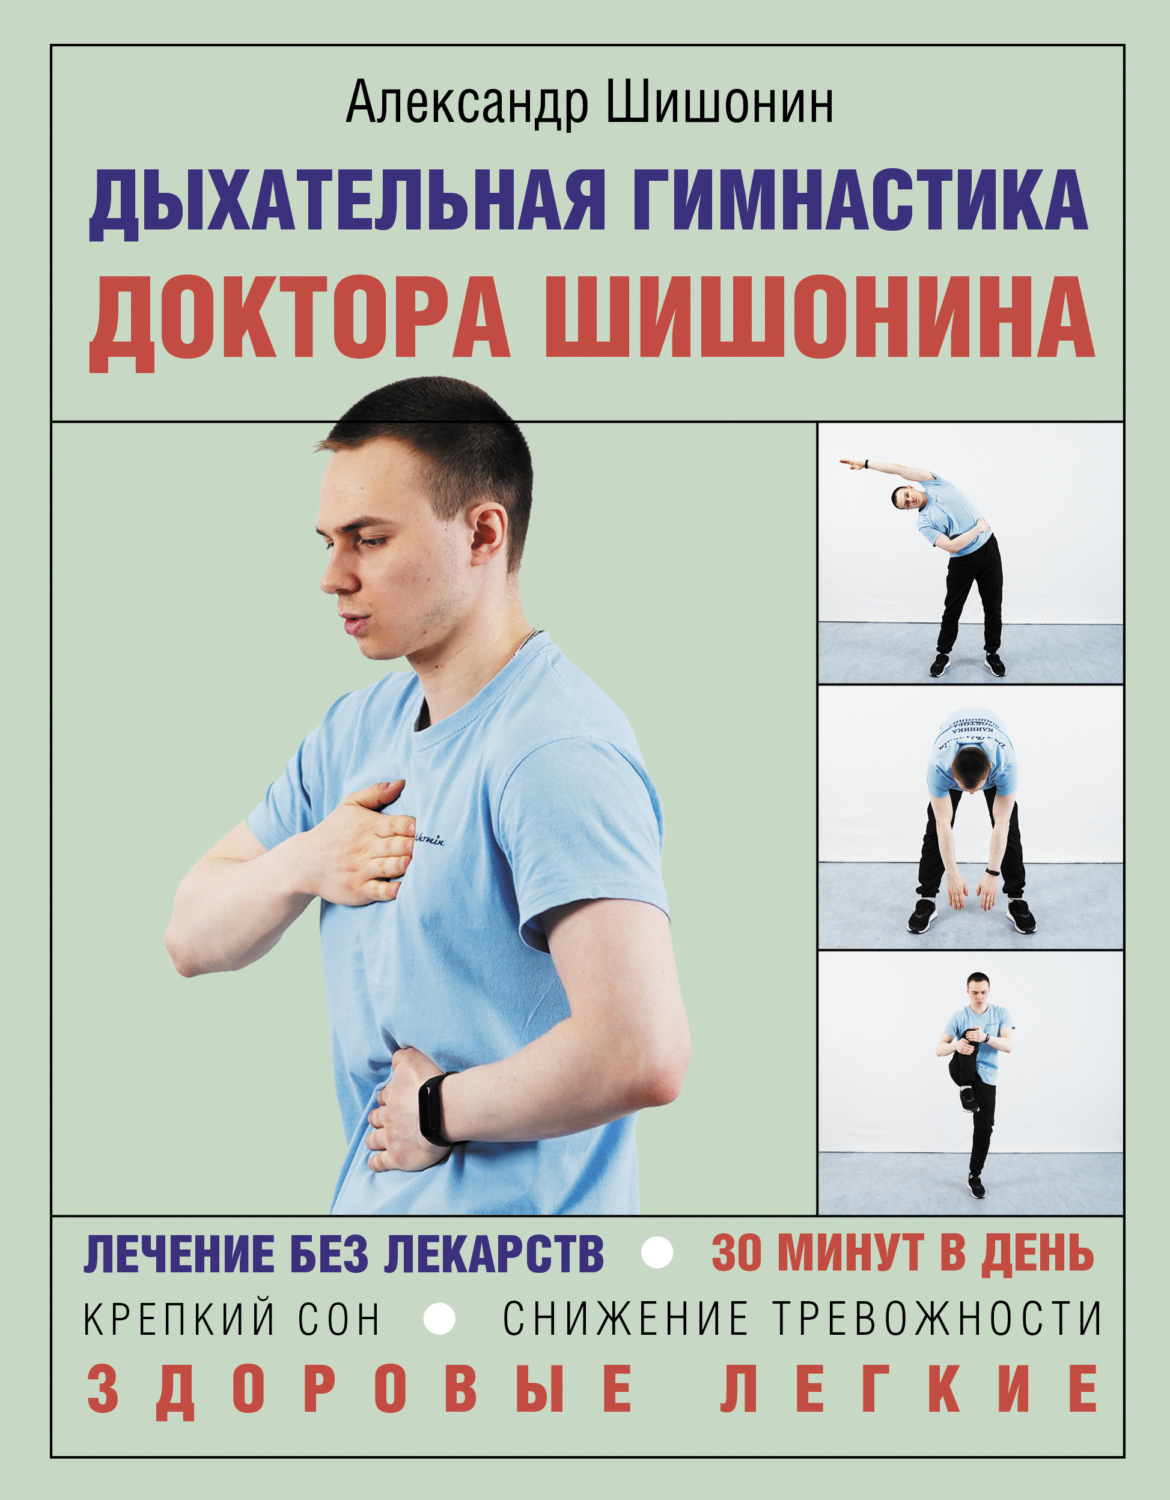 Дыхательная гимнастика доктора Шишонина, Александр Шишонин – скачать книгу fb2, epub, pdf на Литрес